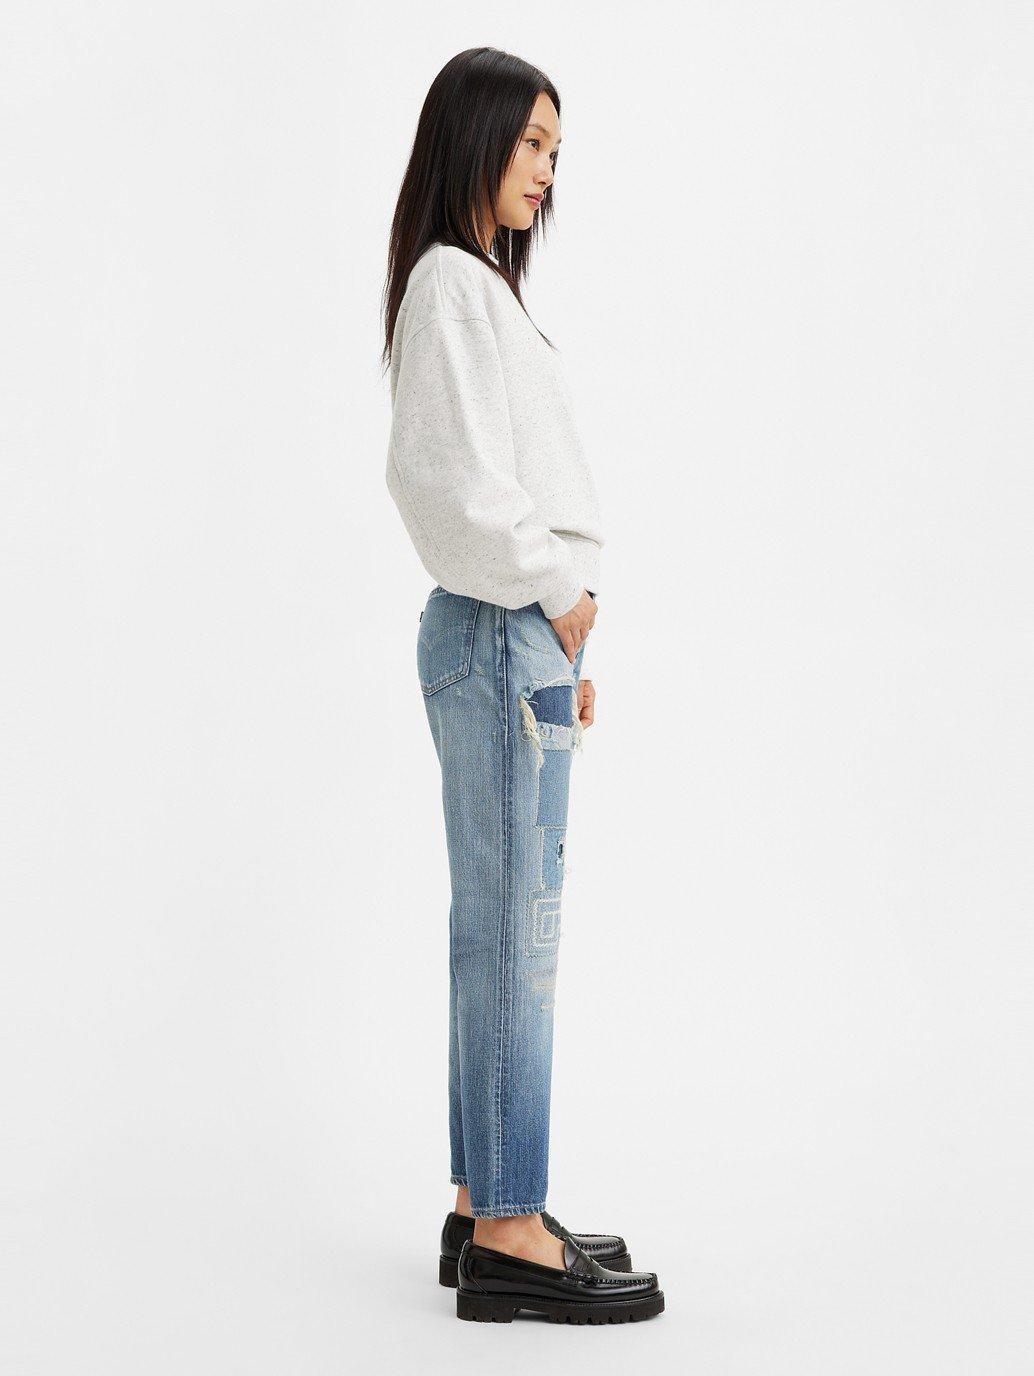 Buy Levi's® Made in Japan Women's High-Rise Boyfriend Jeans | Levi’s ...